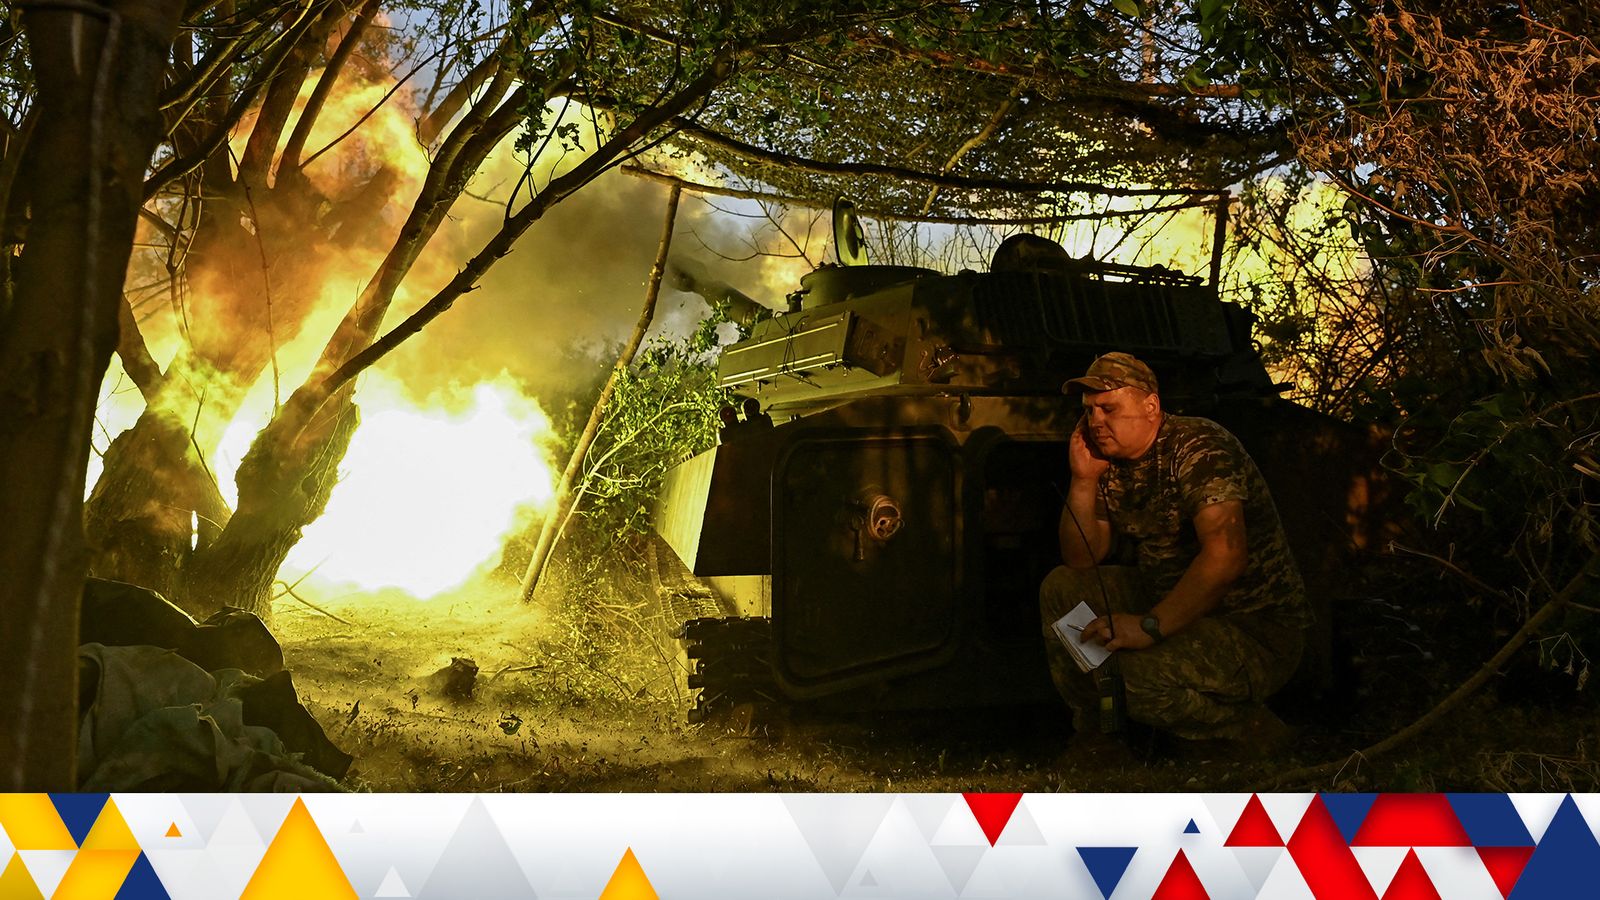 Ukraine-Russia war latest: Germany to halve military funding for Ukraine